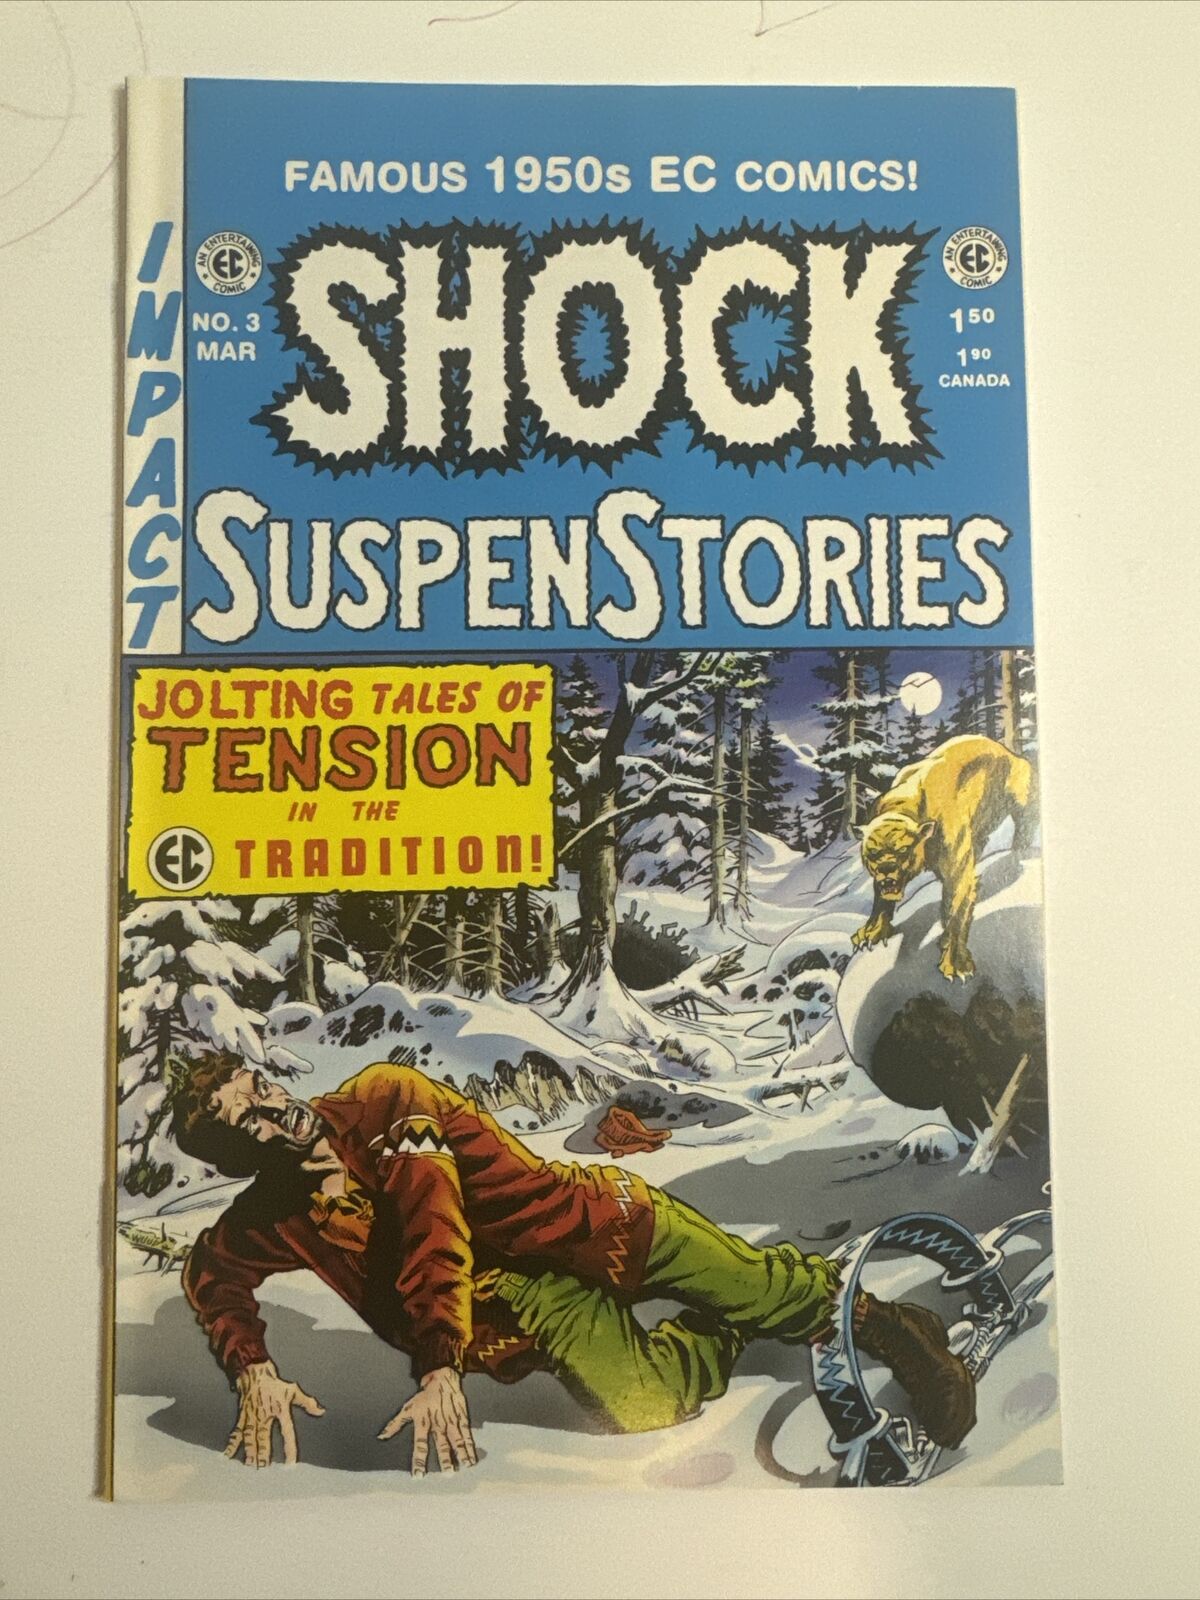 Shock SuspenStories #3: “Just Desserts” Cochrane Reprint, EC Comics 1993 NM-